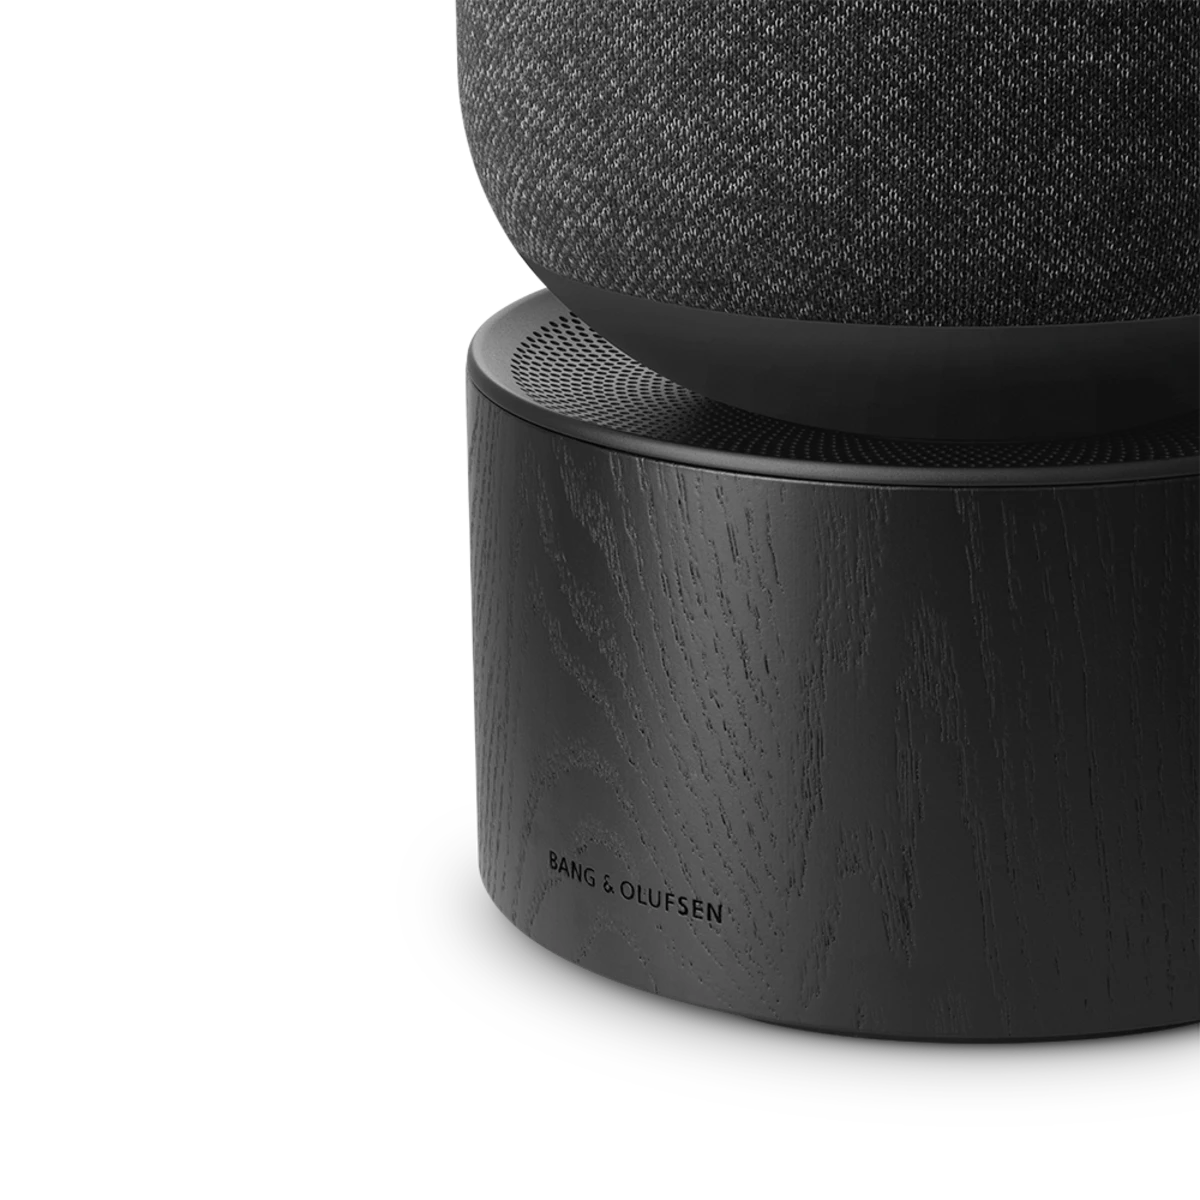 BEOSOUND BALANCE Smart Wireless Speaker